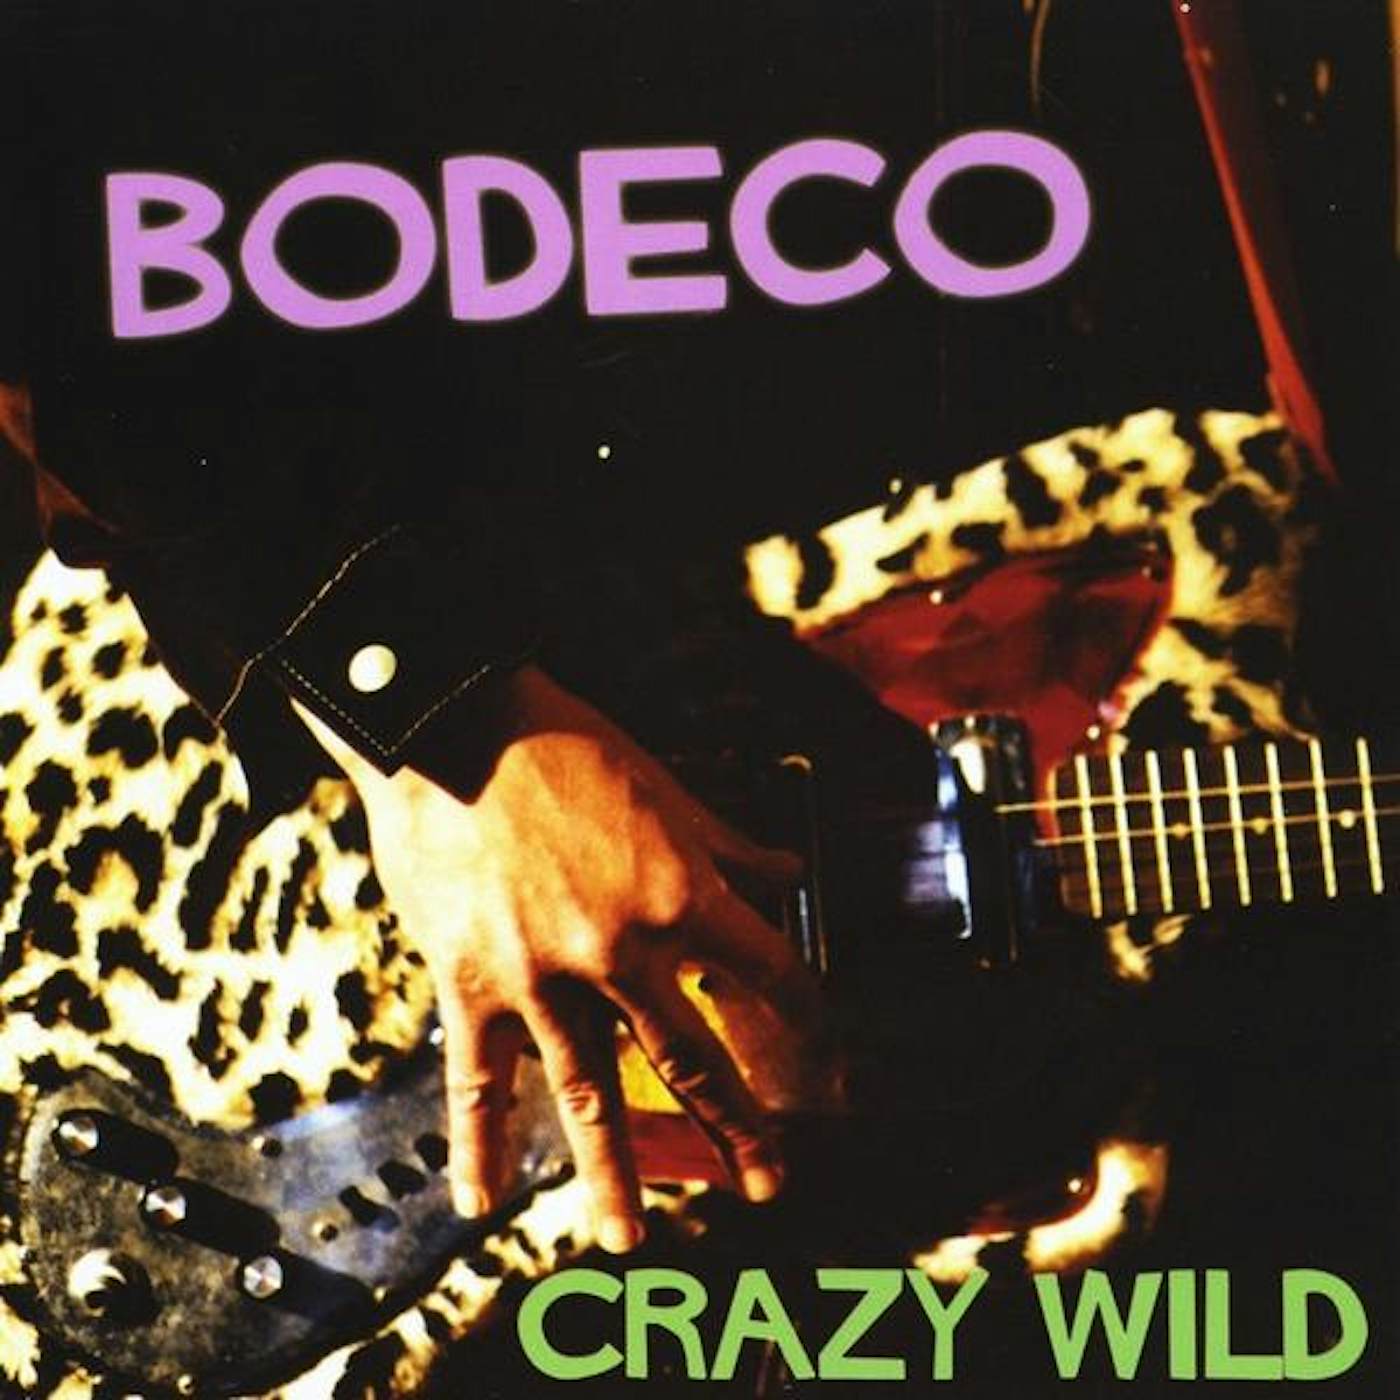 Bodeco CRAZY WILD CD